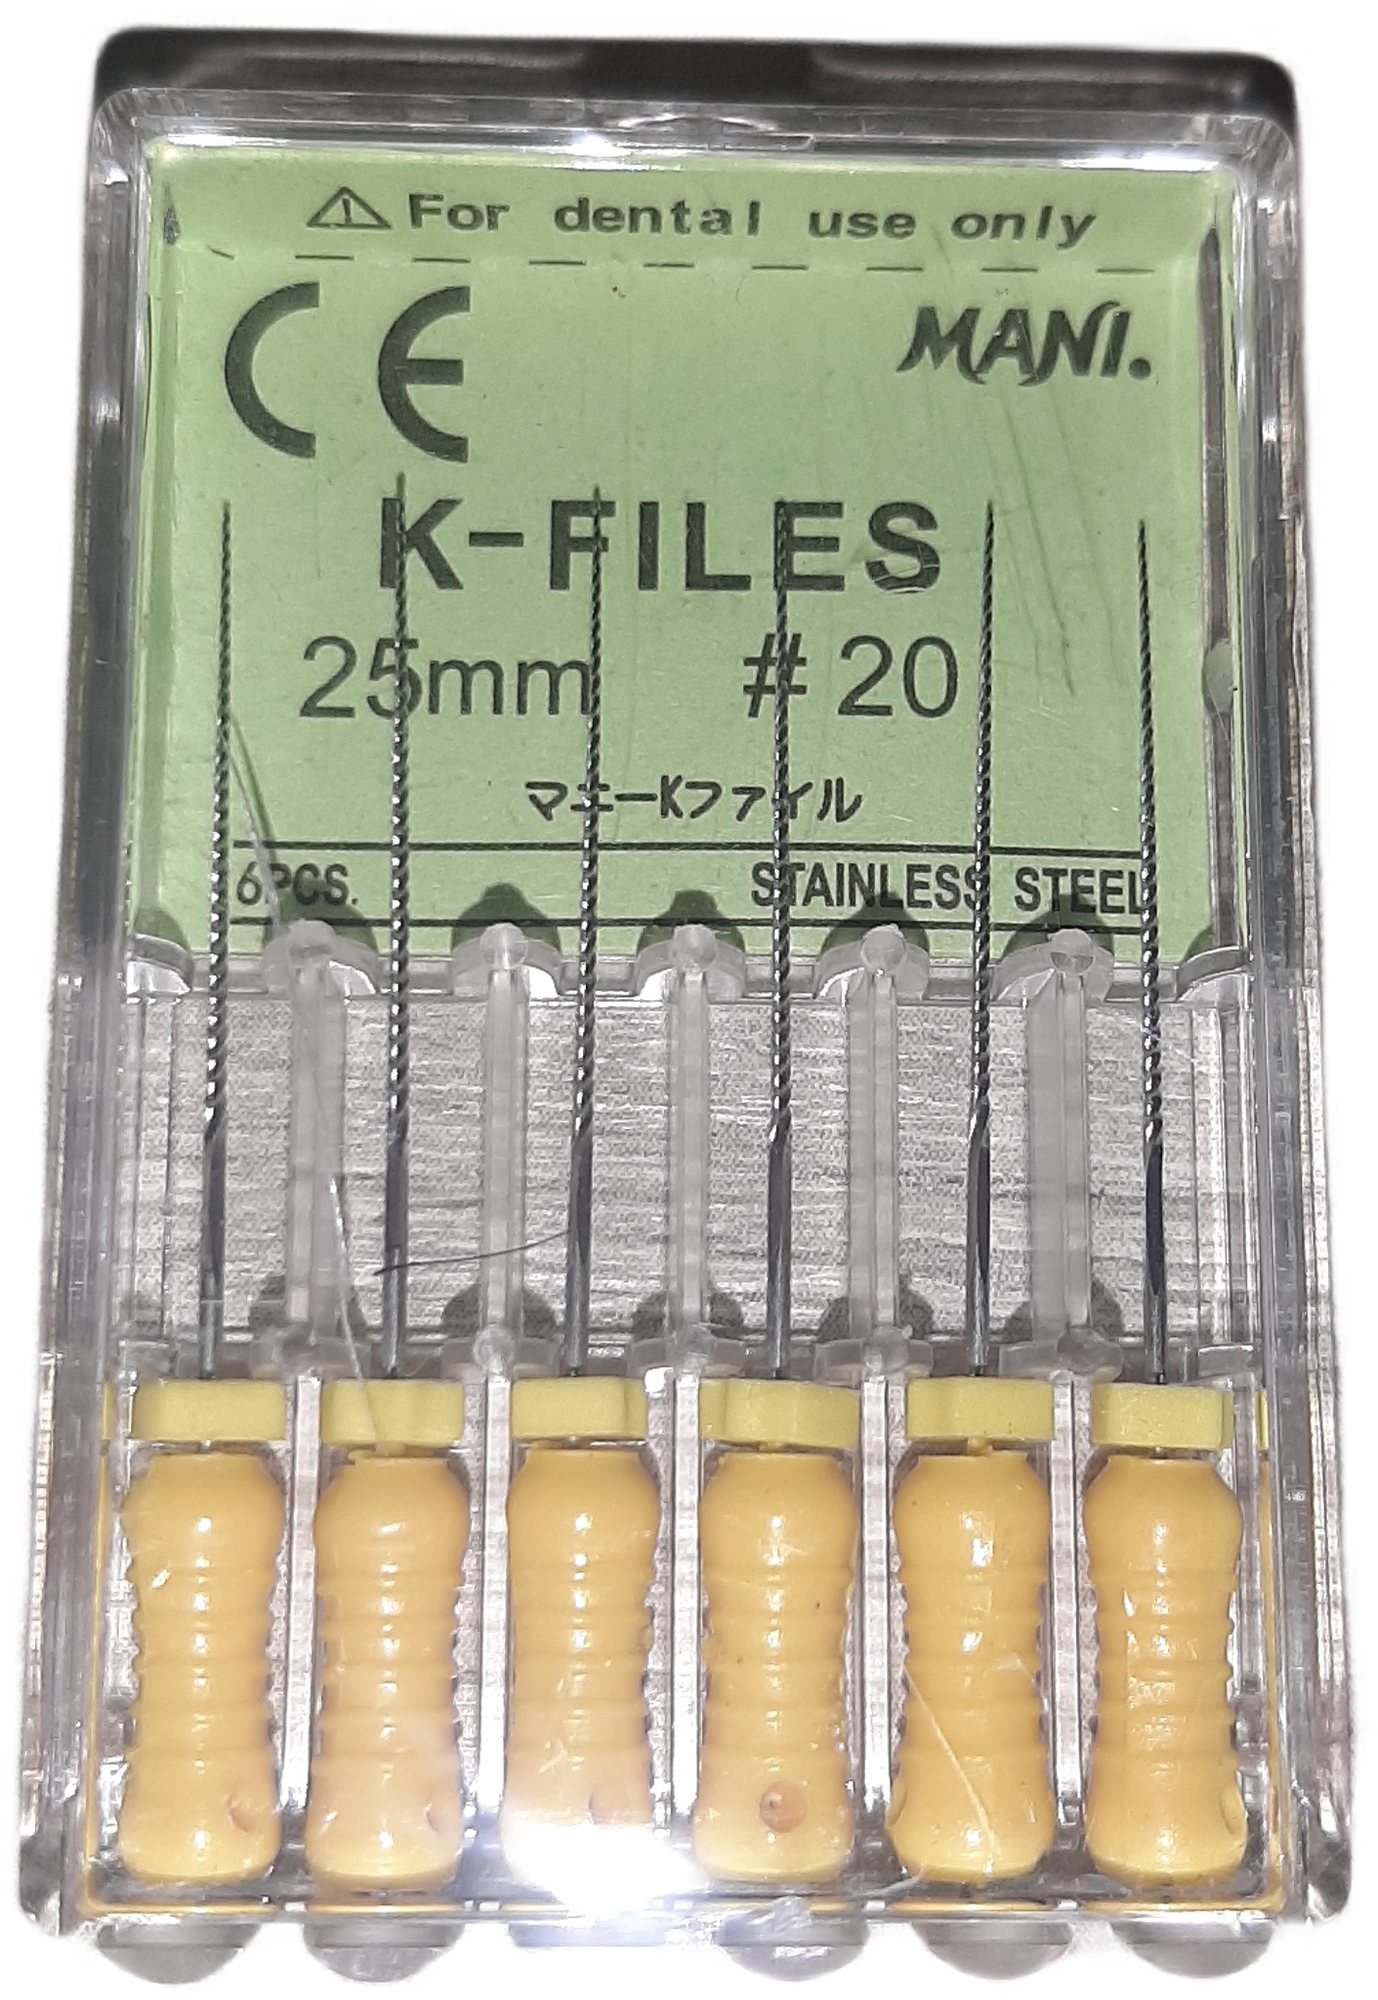 K-files №20 мани (25мм)